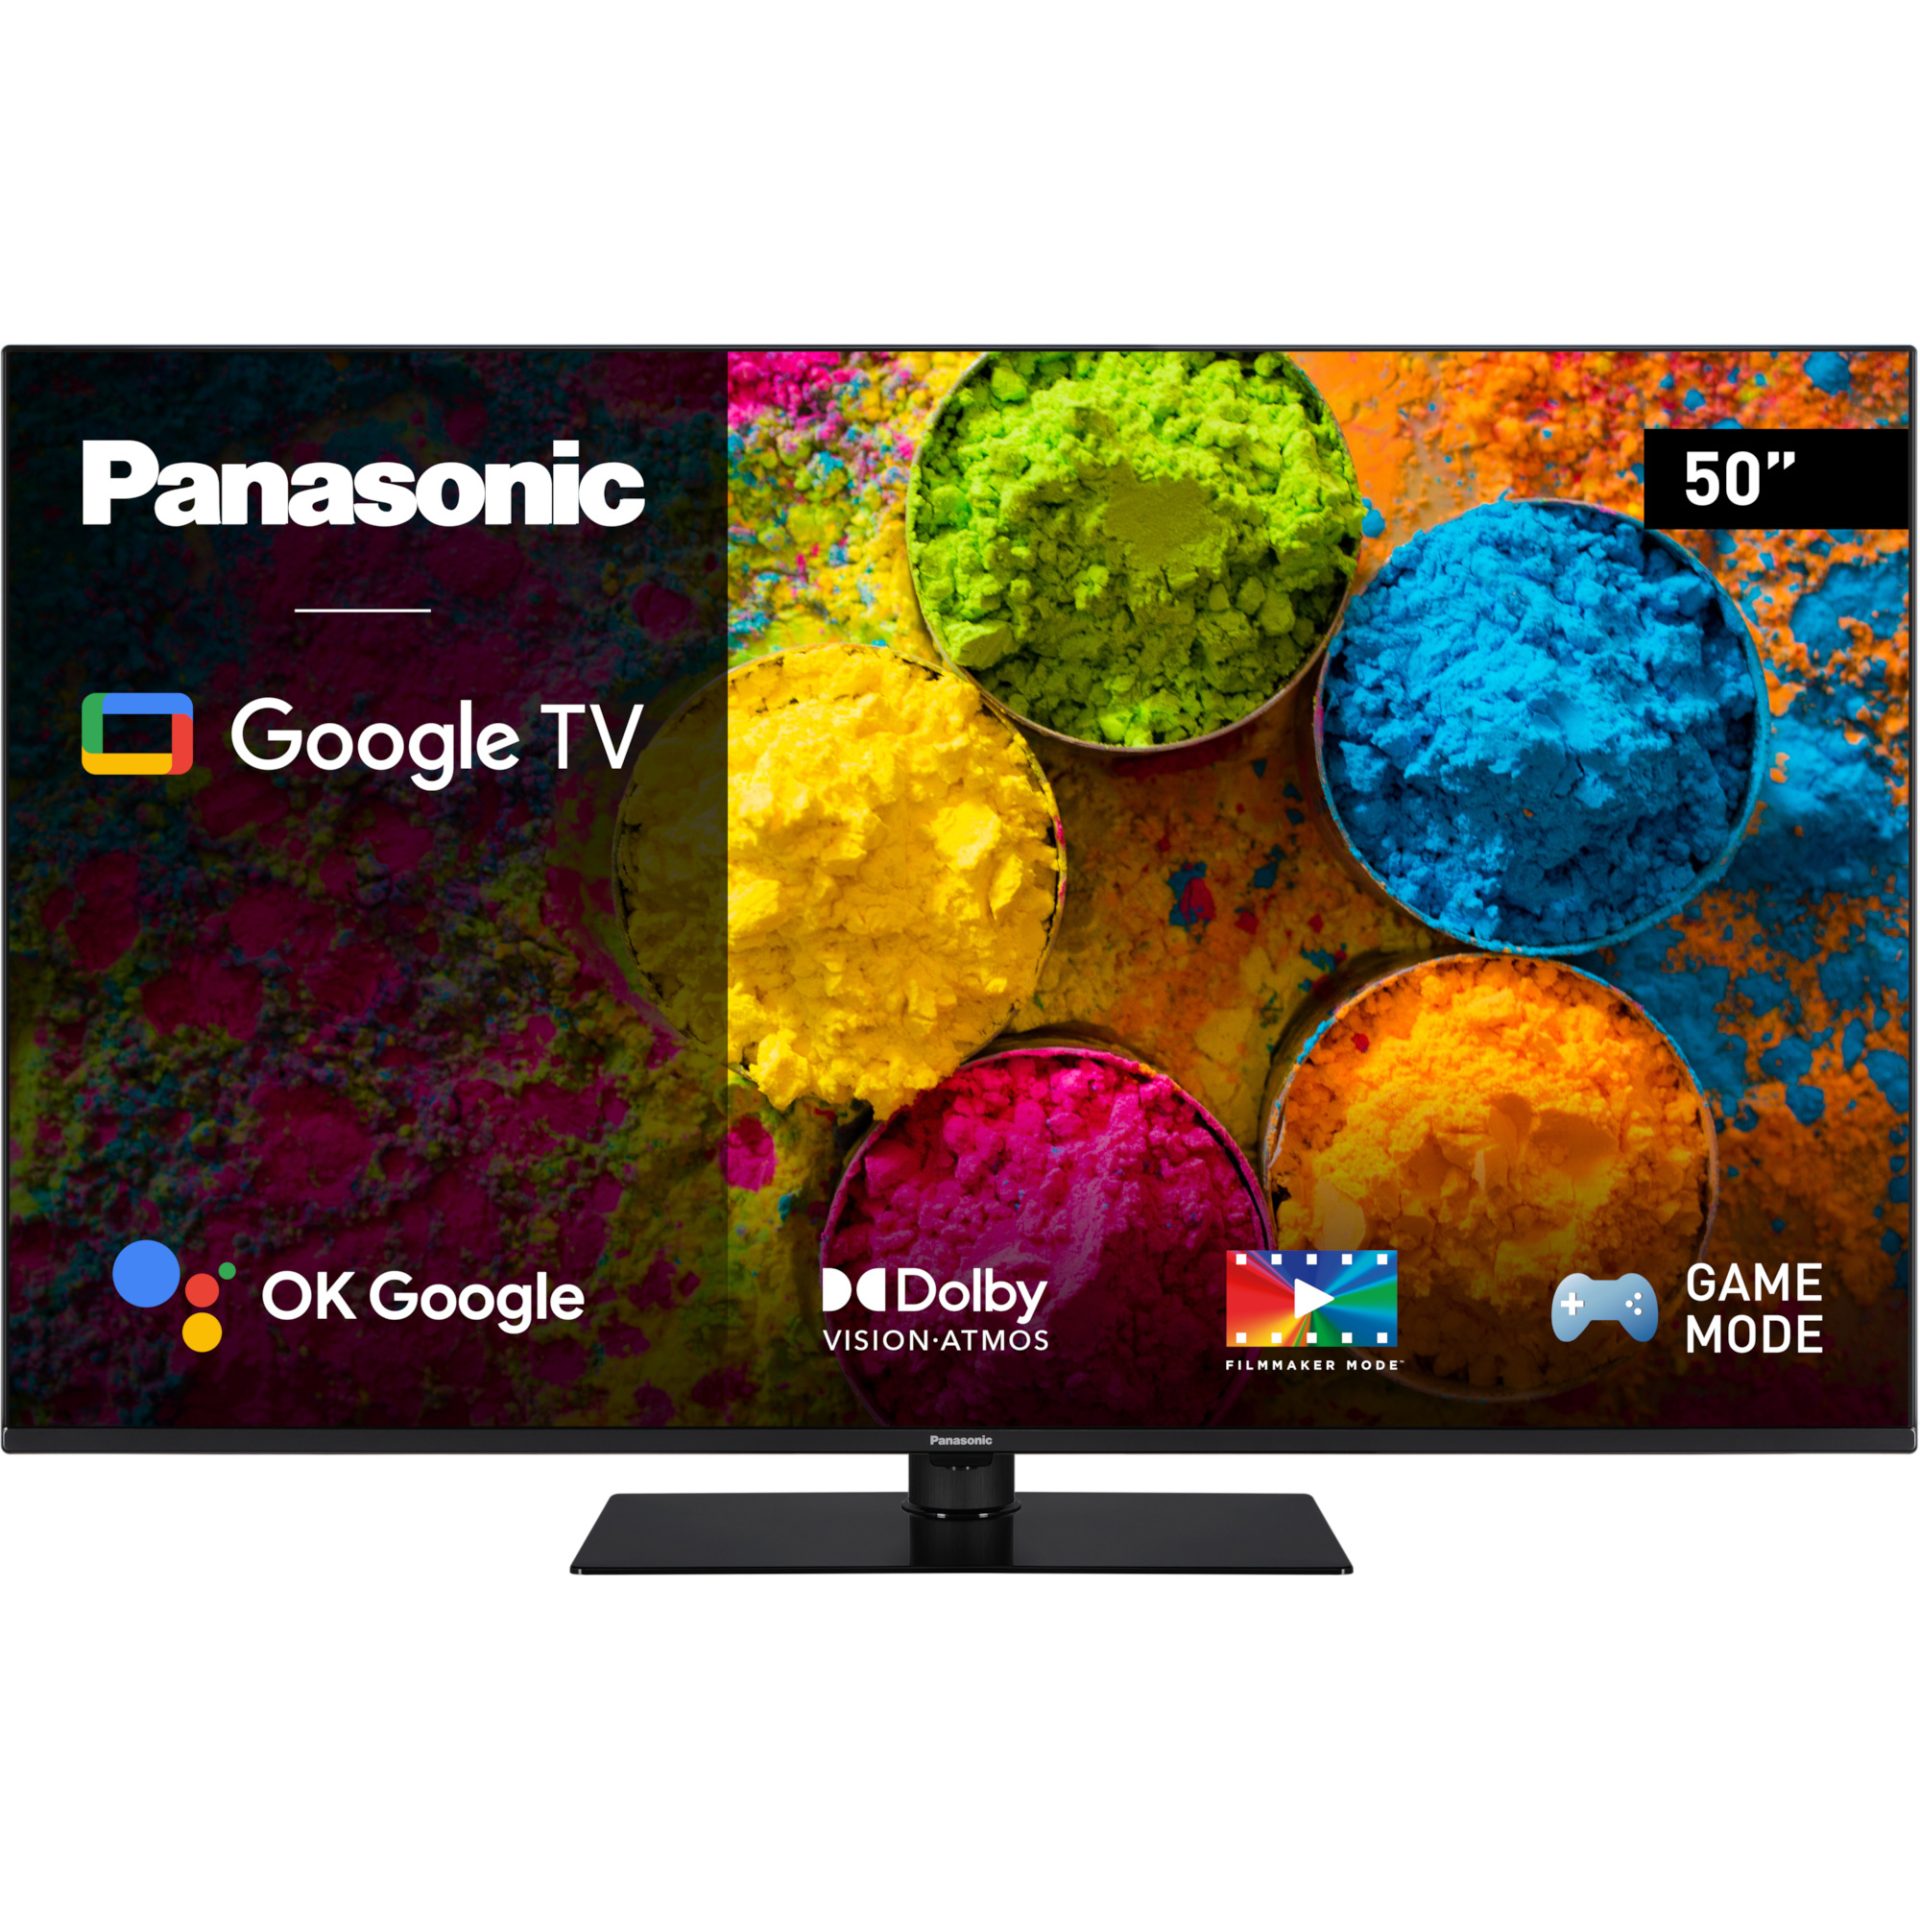 Zdjęcia - Telewizor Panasonic TX-50MX700  Google TV LED 4K Ultra HD 50" (DVB-T2/HEVC, 